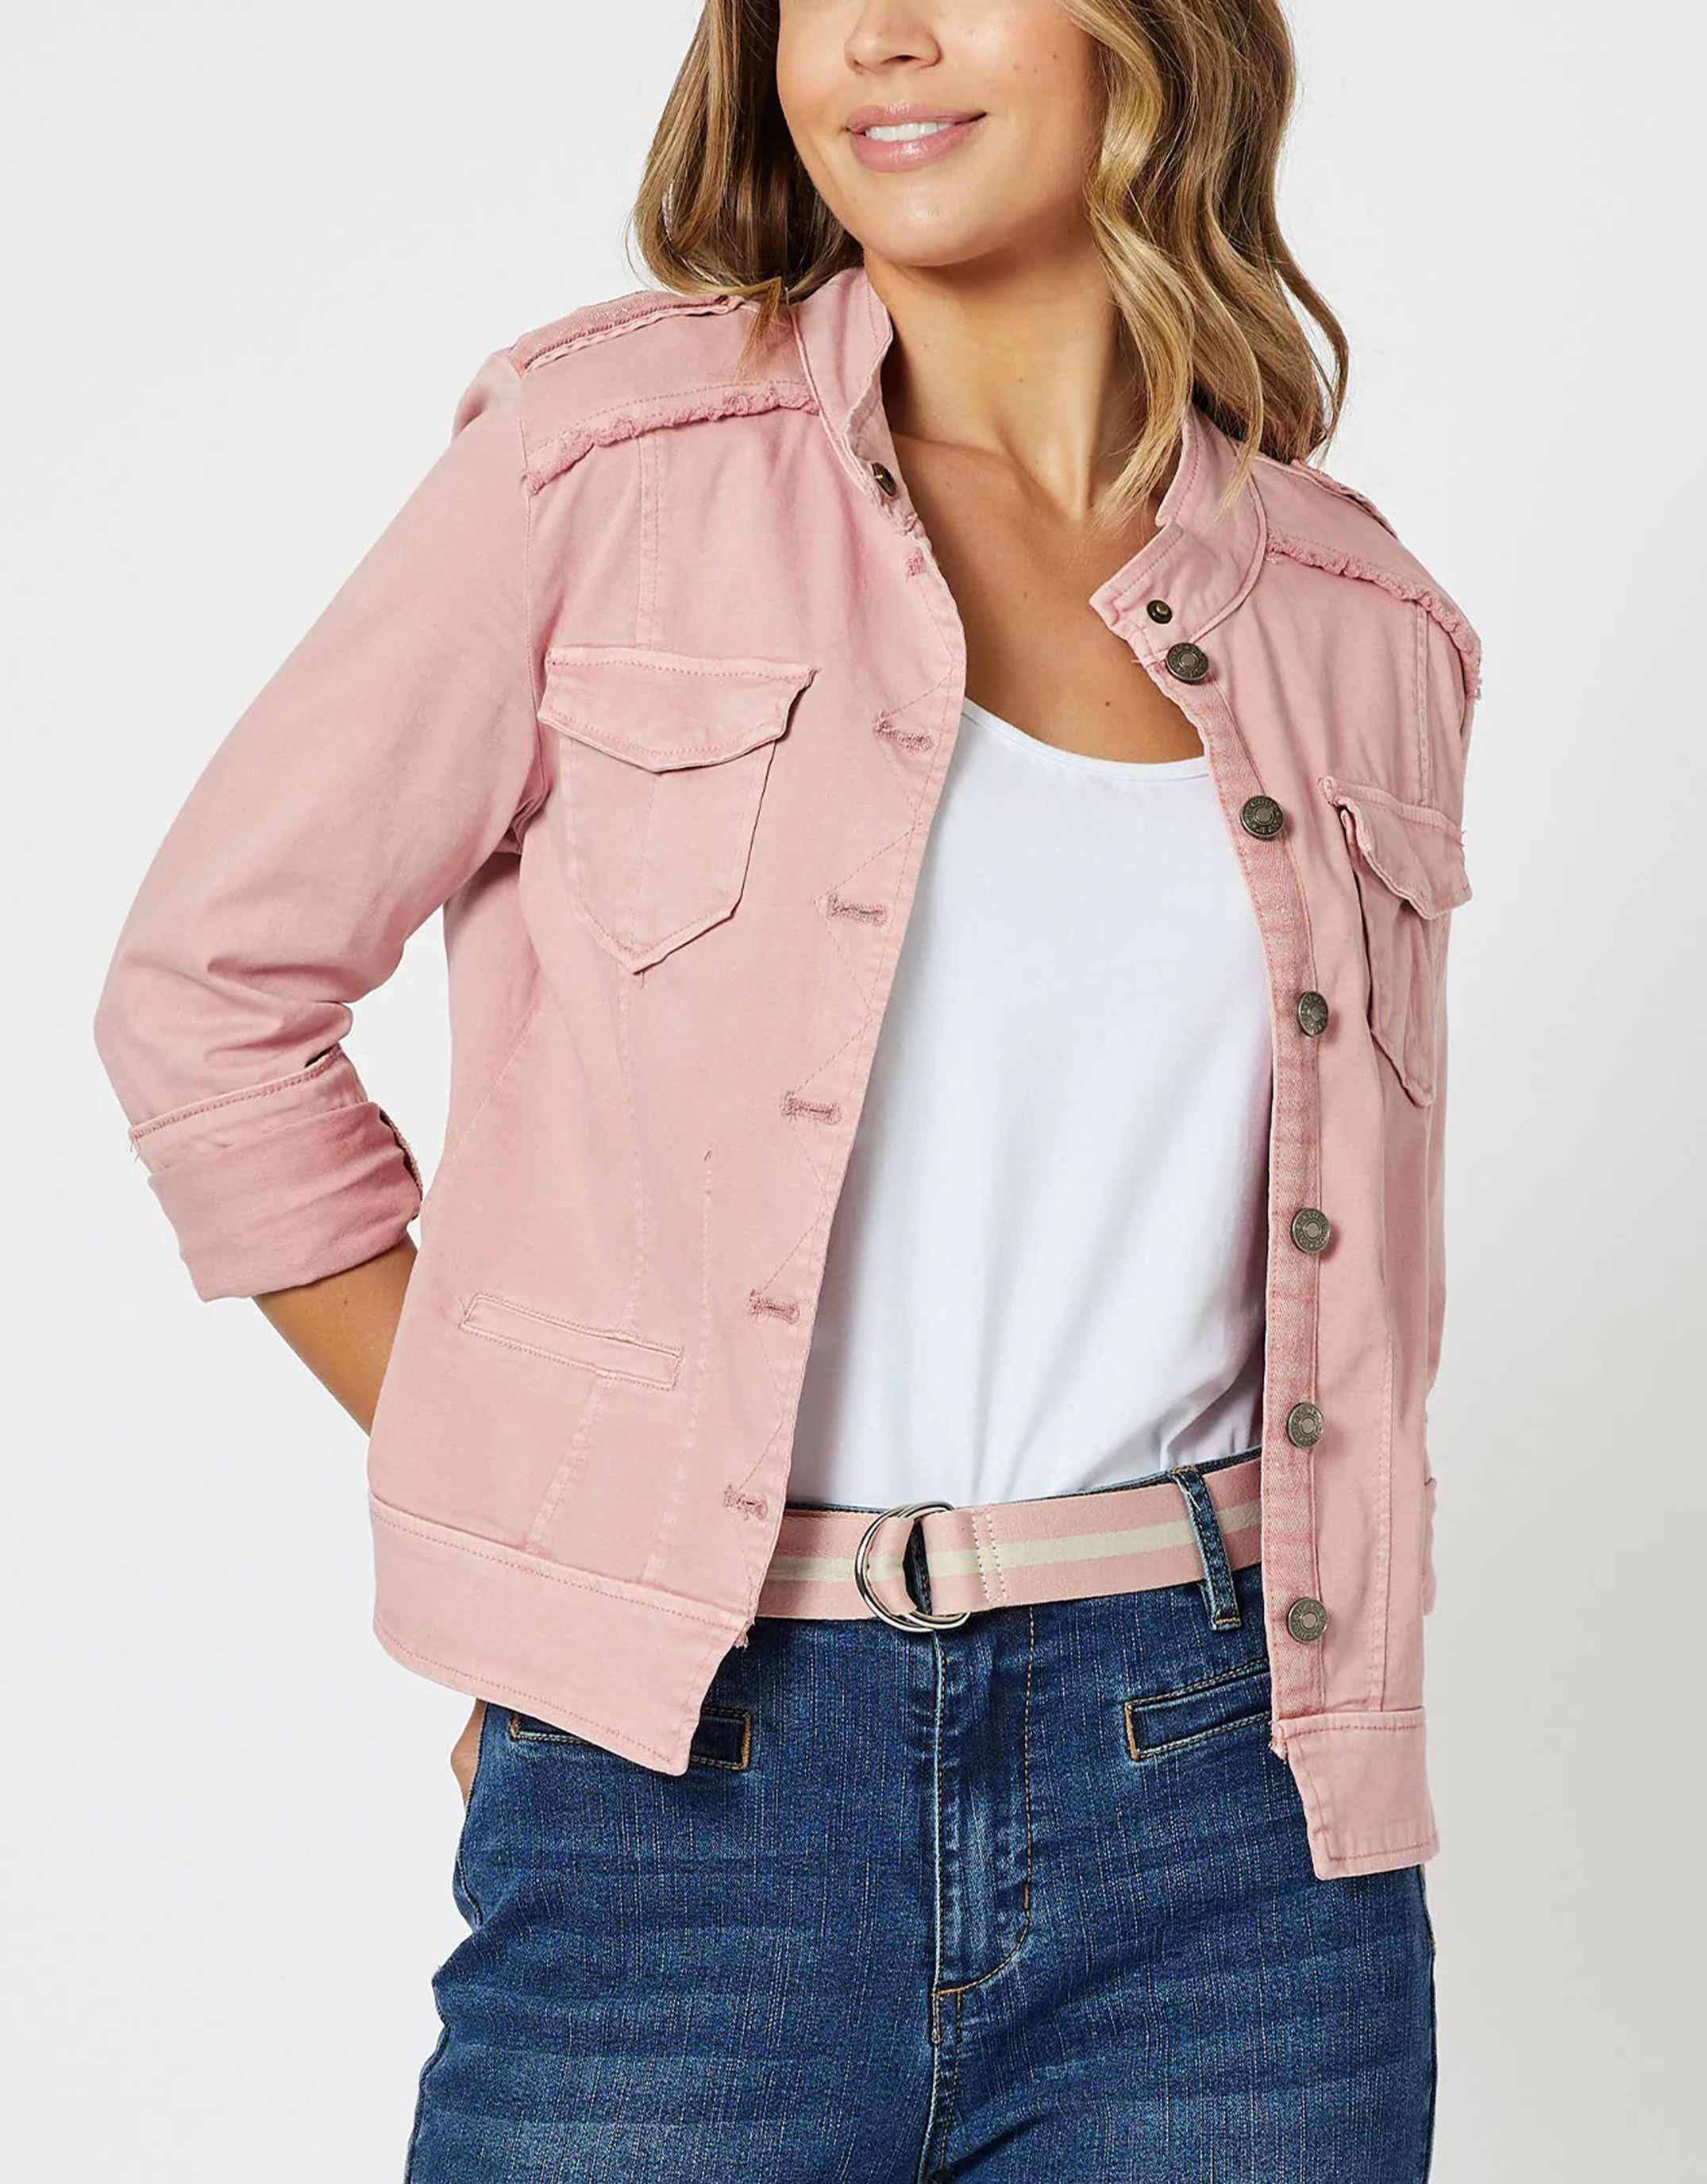 threadz-military-denim-jacket-pink-womens-clothing